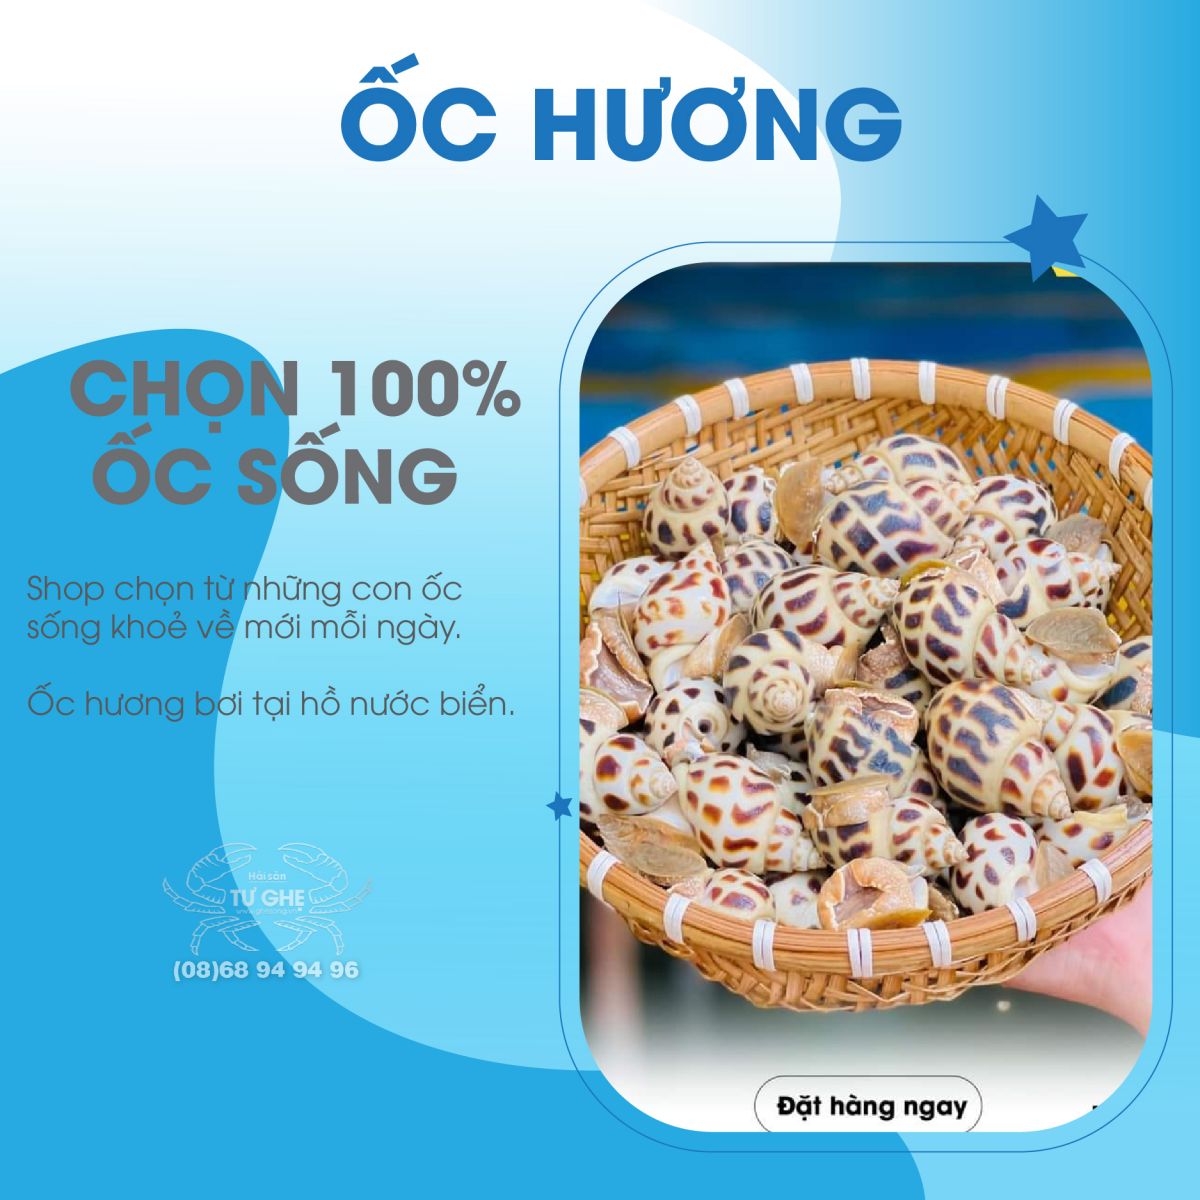 oc-huong-chon-song-chat-luong-tai-tu-ghe